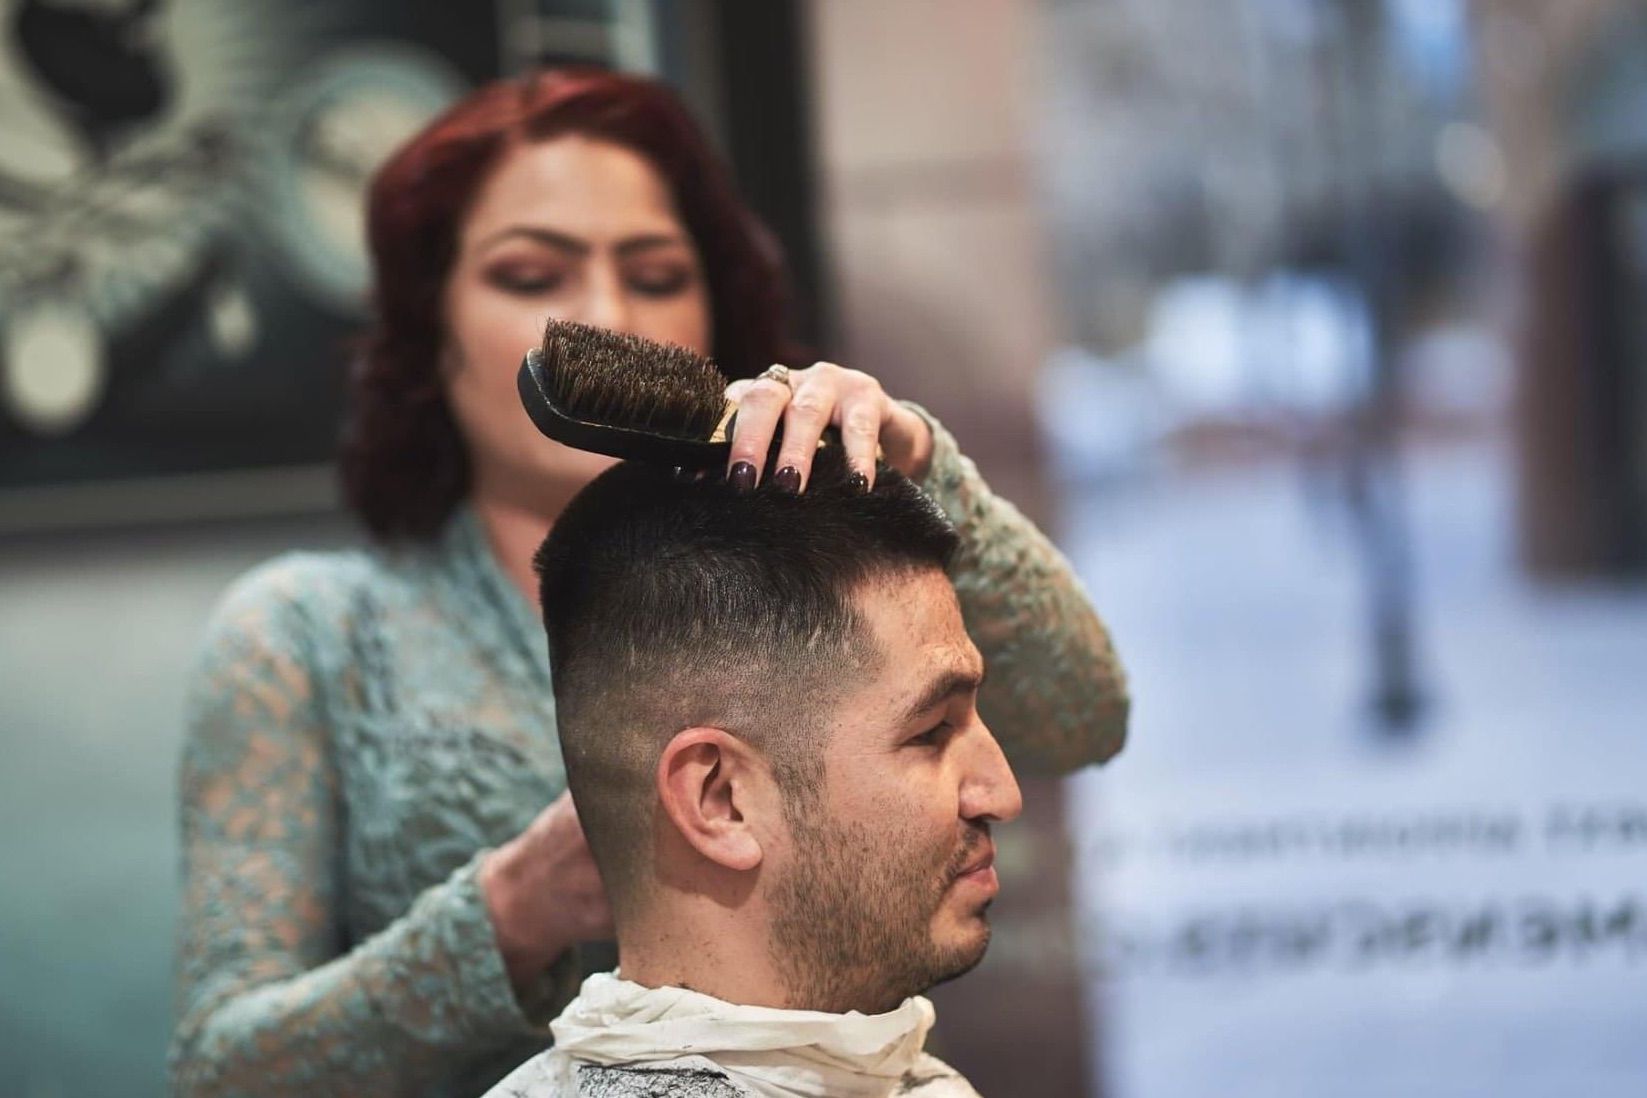 Top 10 Men's Hairstyles in 2020 - Chicago Haircut & Grooming